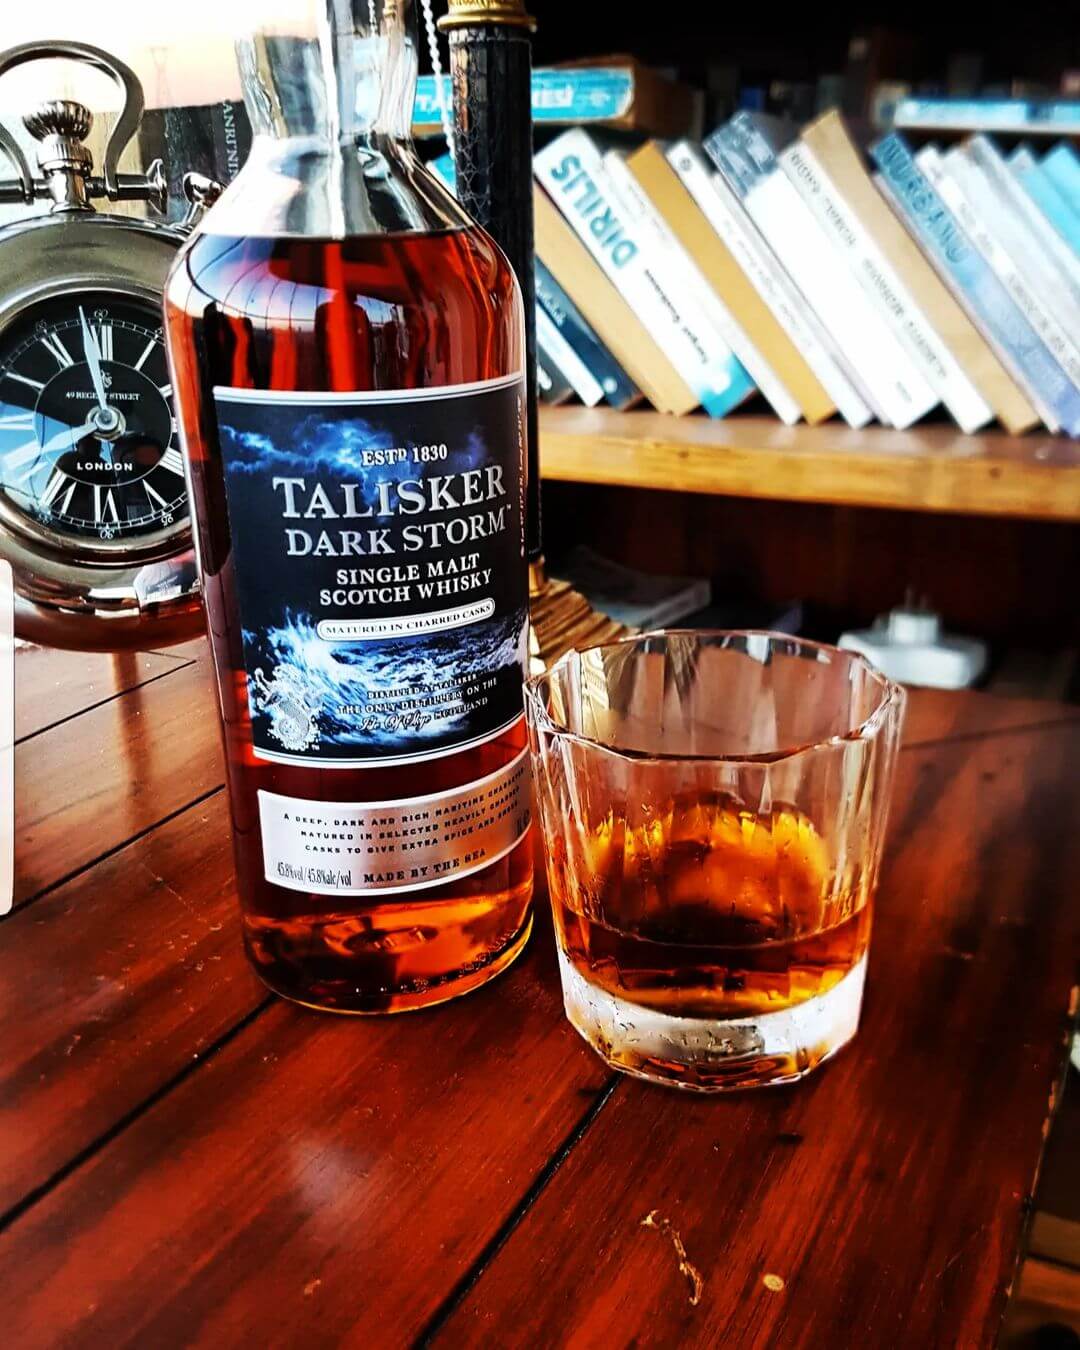 Talisker Dark Storm Island Single Malt Scotch Whisky